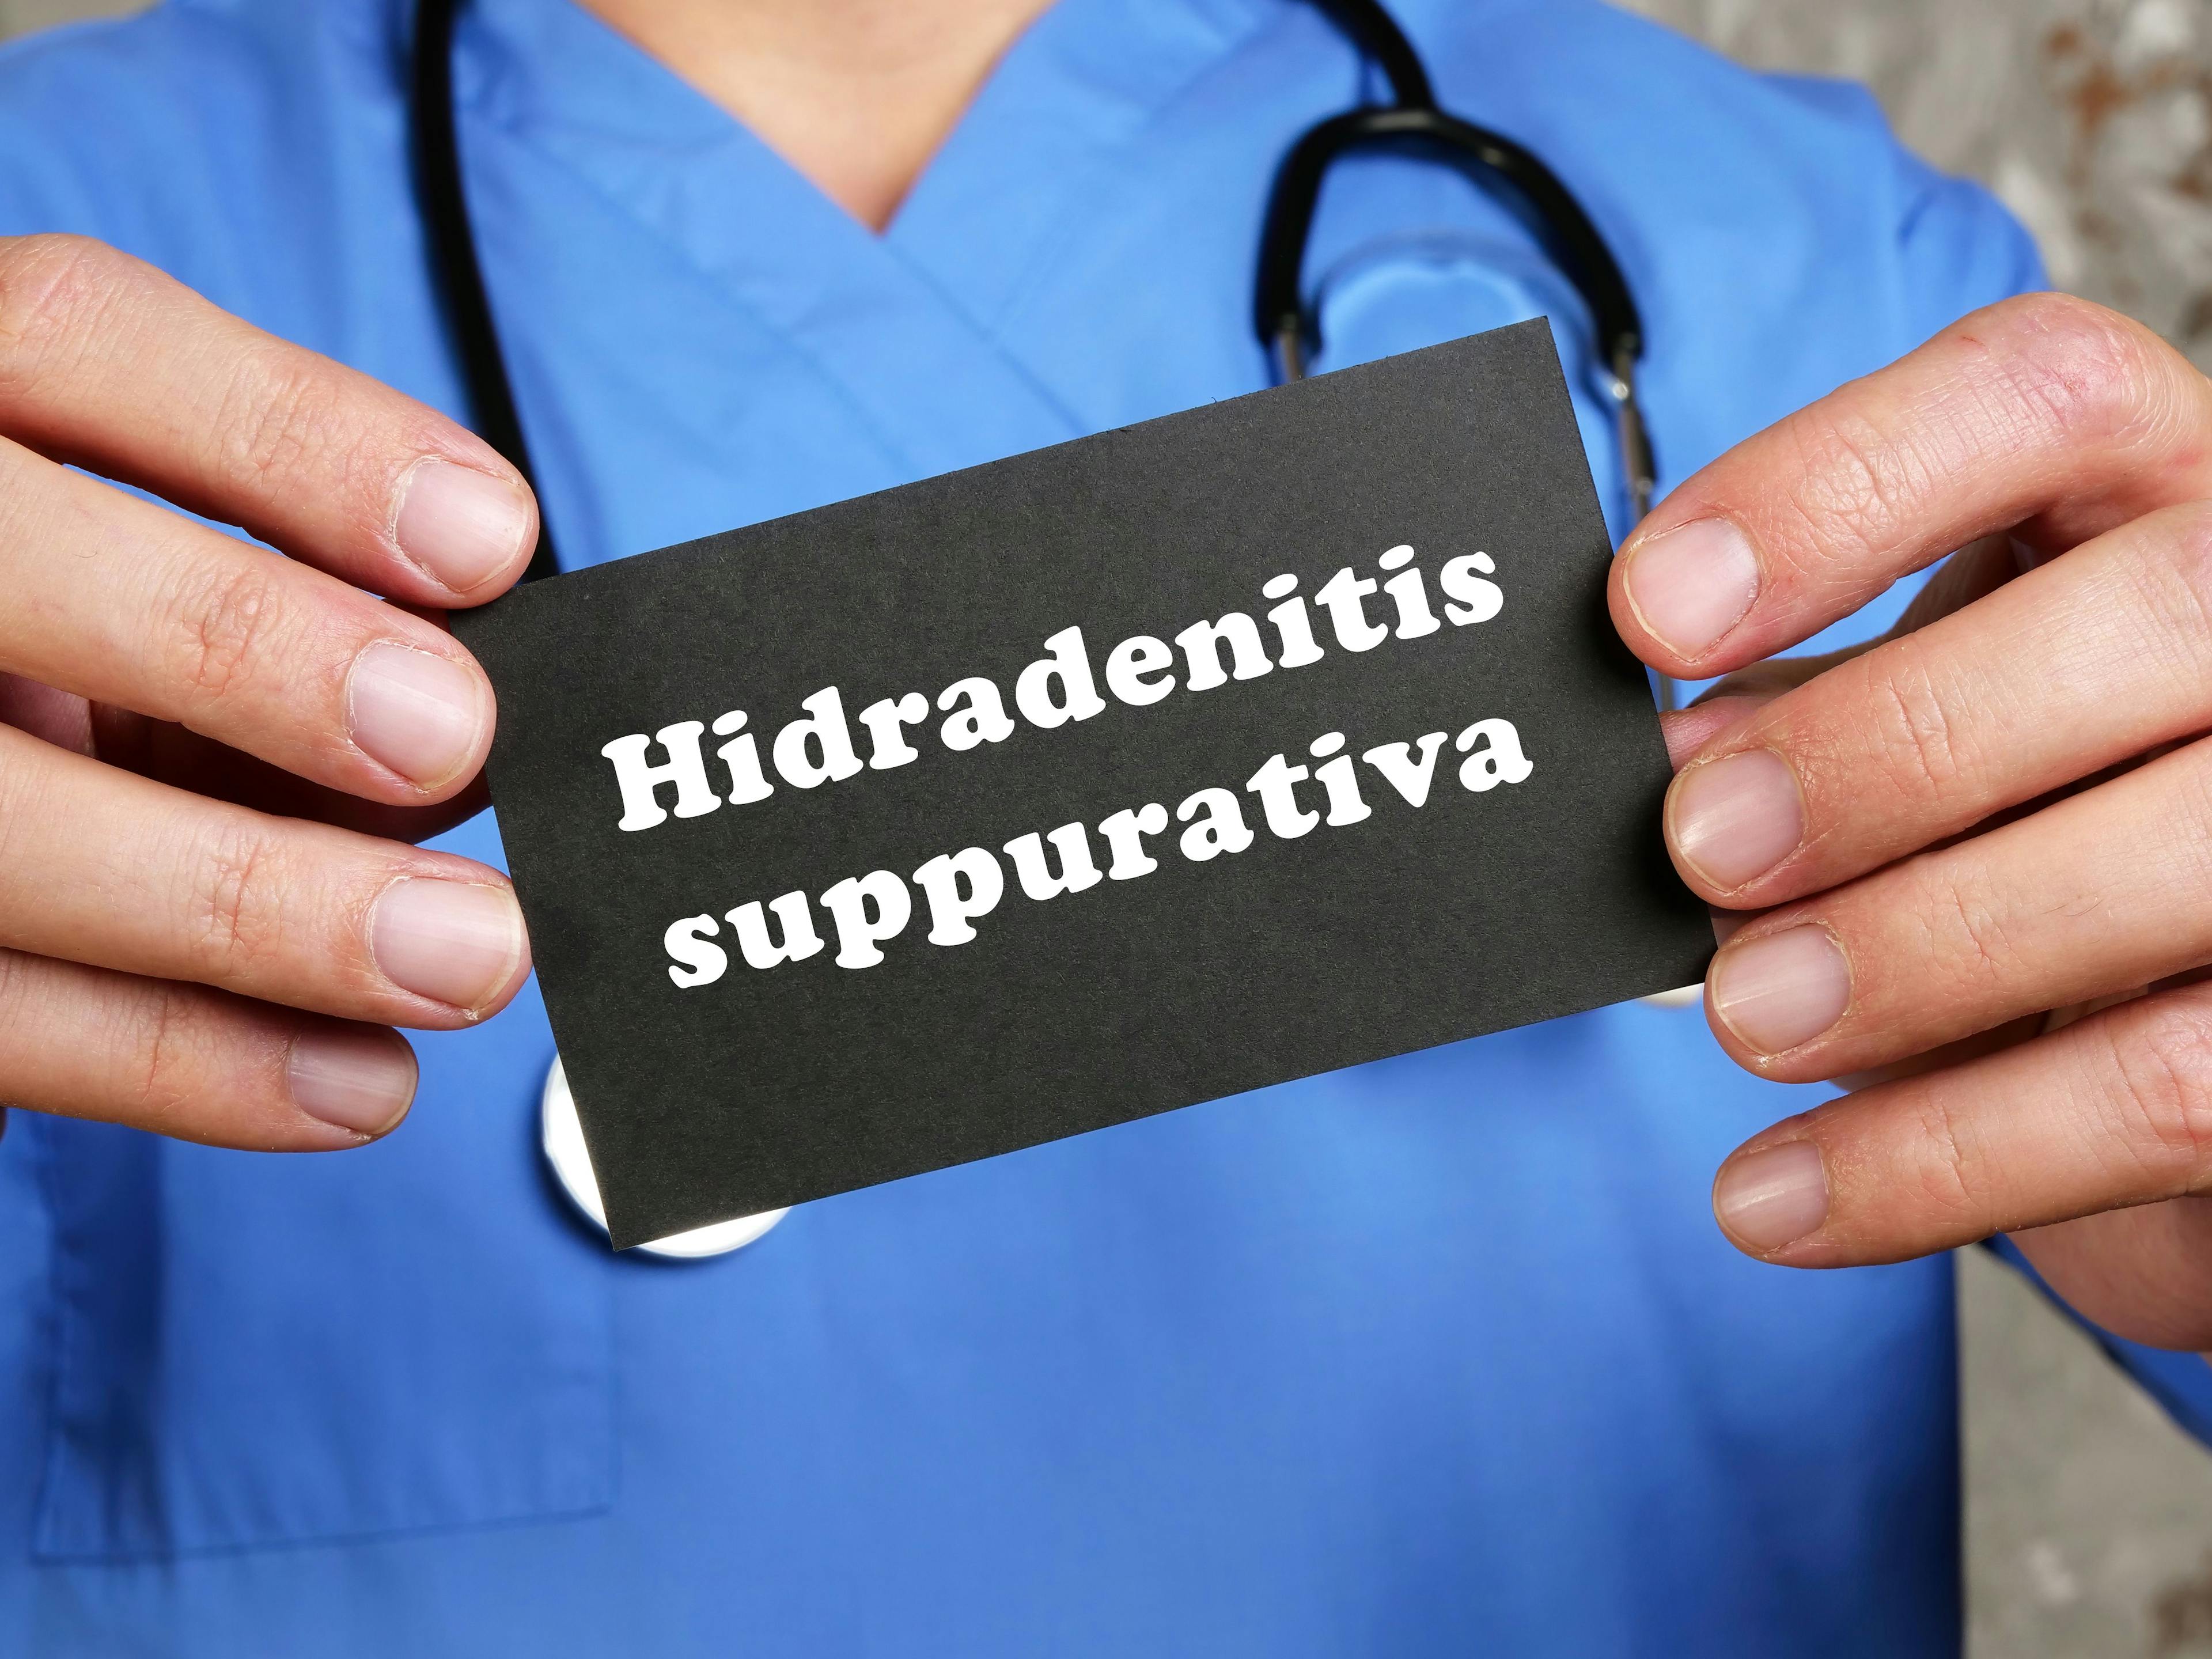 Health care concept meaning Hidradenitis suppurativa with inscription on the page | Image Credit: Yurii Kibalnik - stock.adobe.com